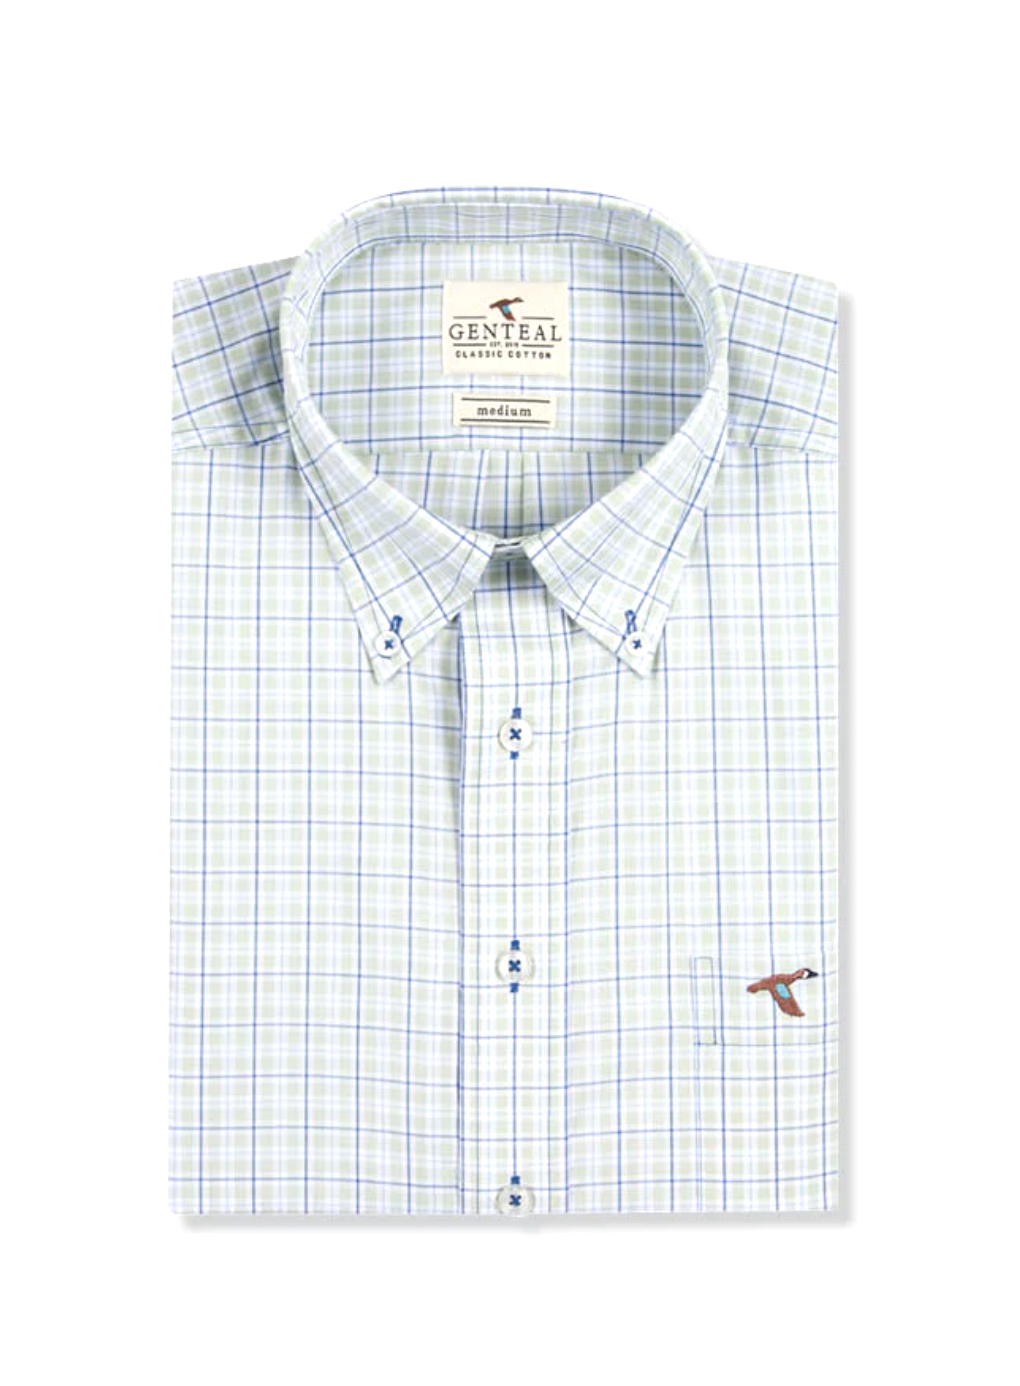 Durango Plaid Cotton Shirt